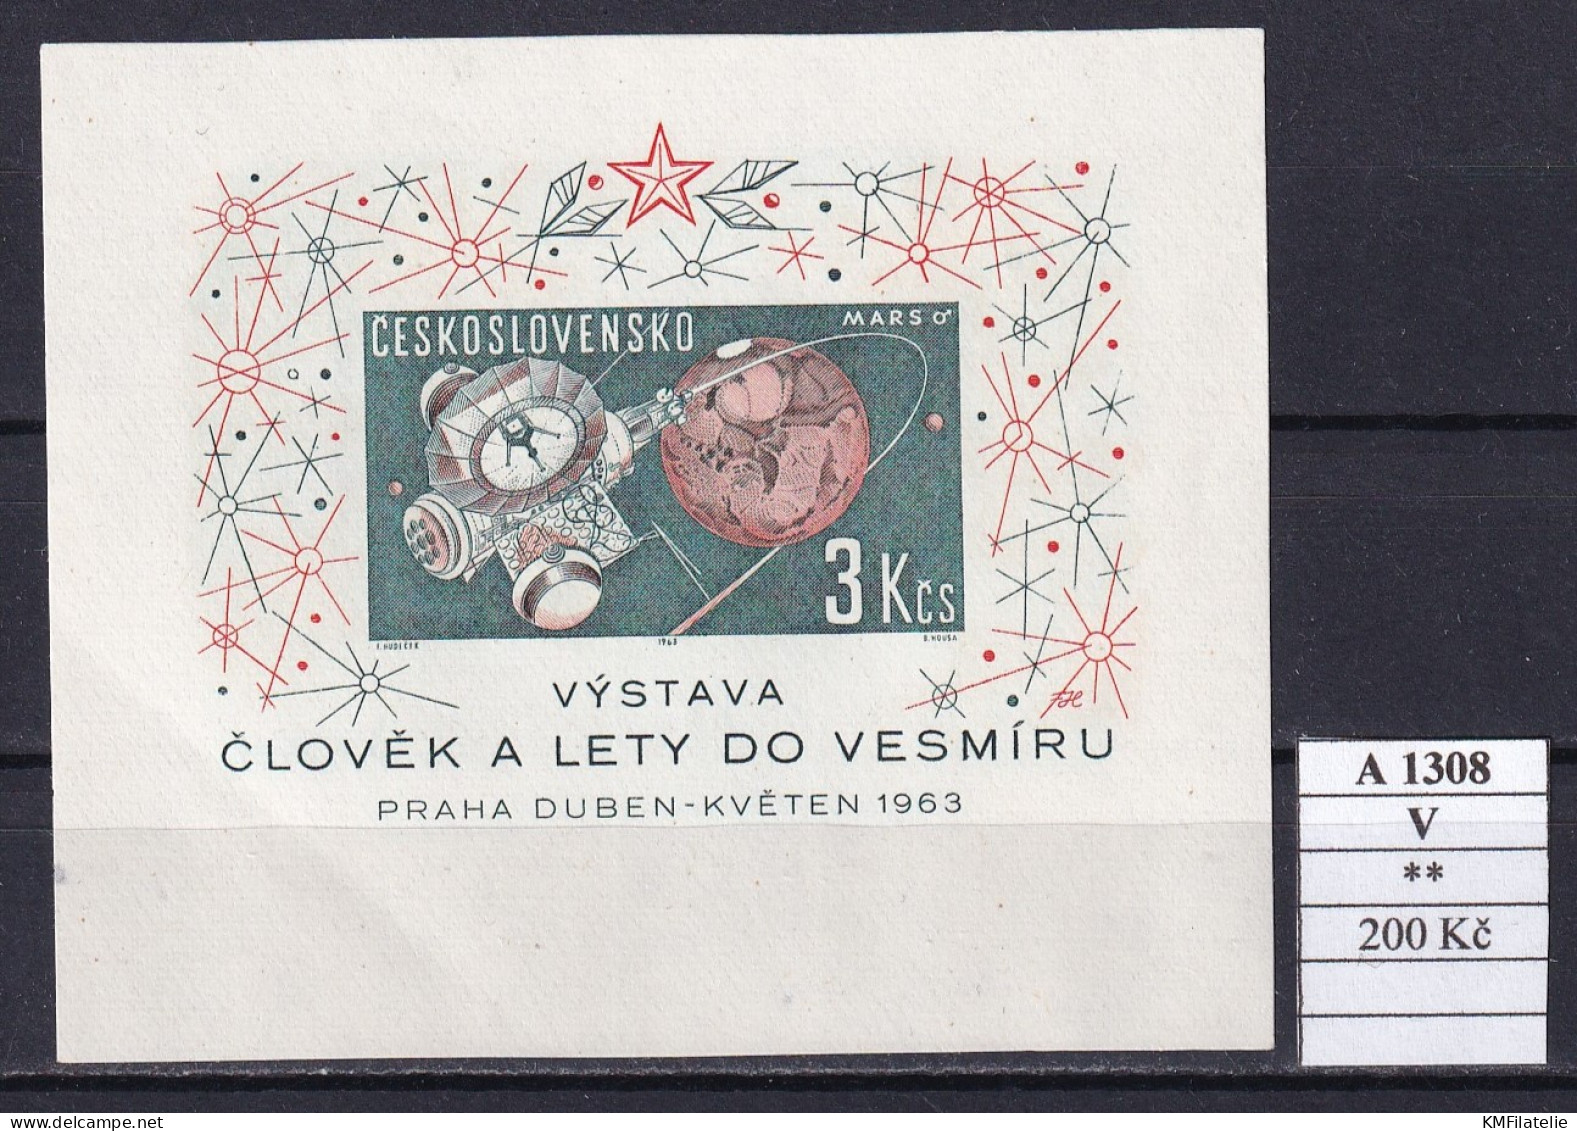 Czechoslovakia Pofis A 1308 V MNH - Unused Stamps